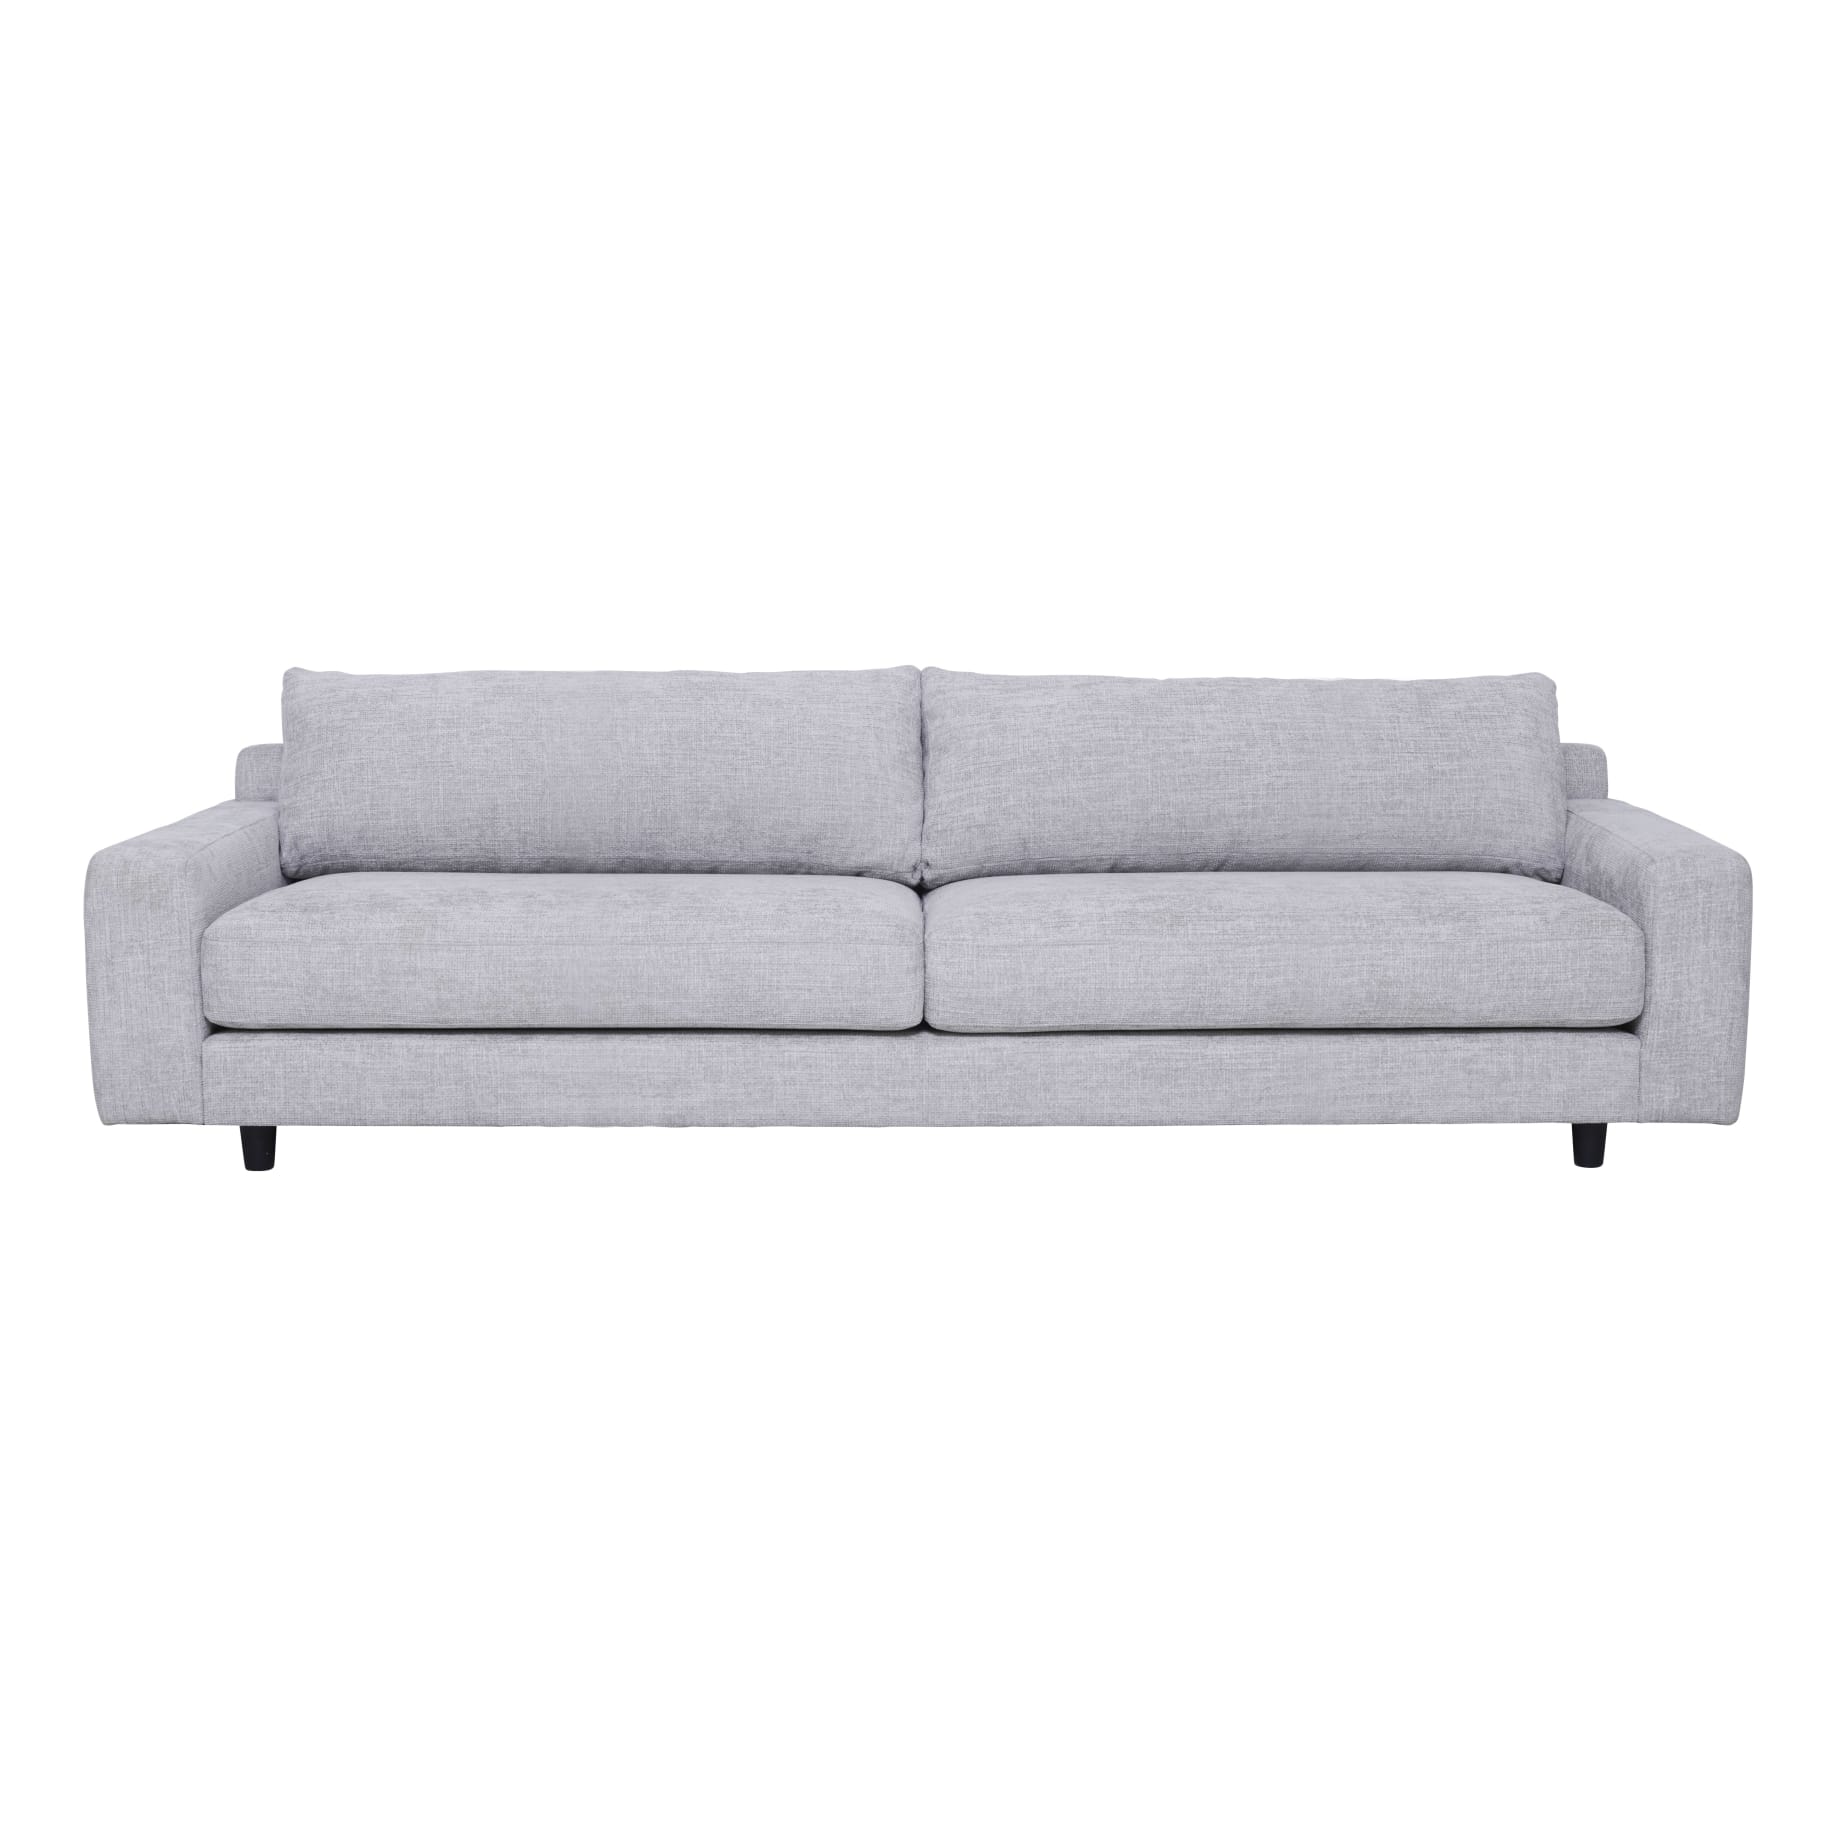 Ambrose 4 Seater Sofa in Selected Fabrics